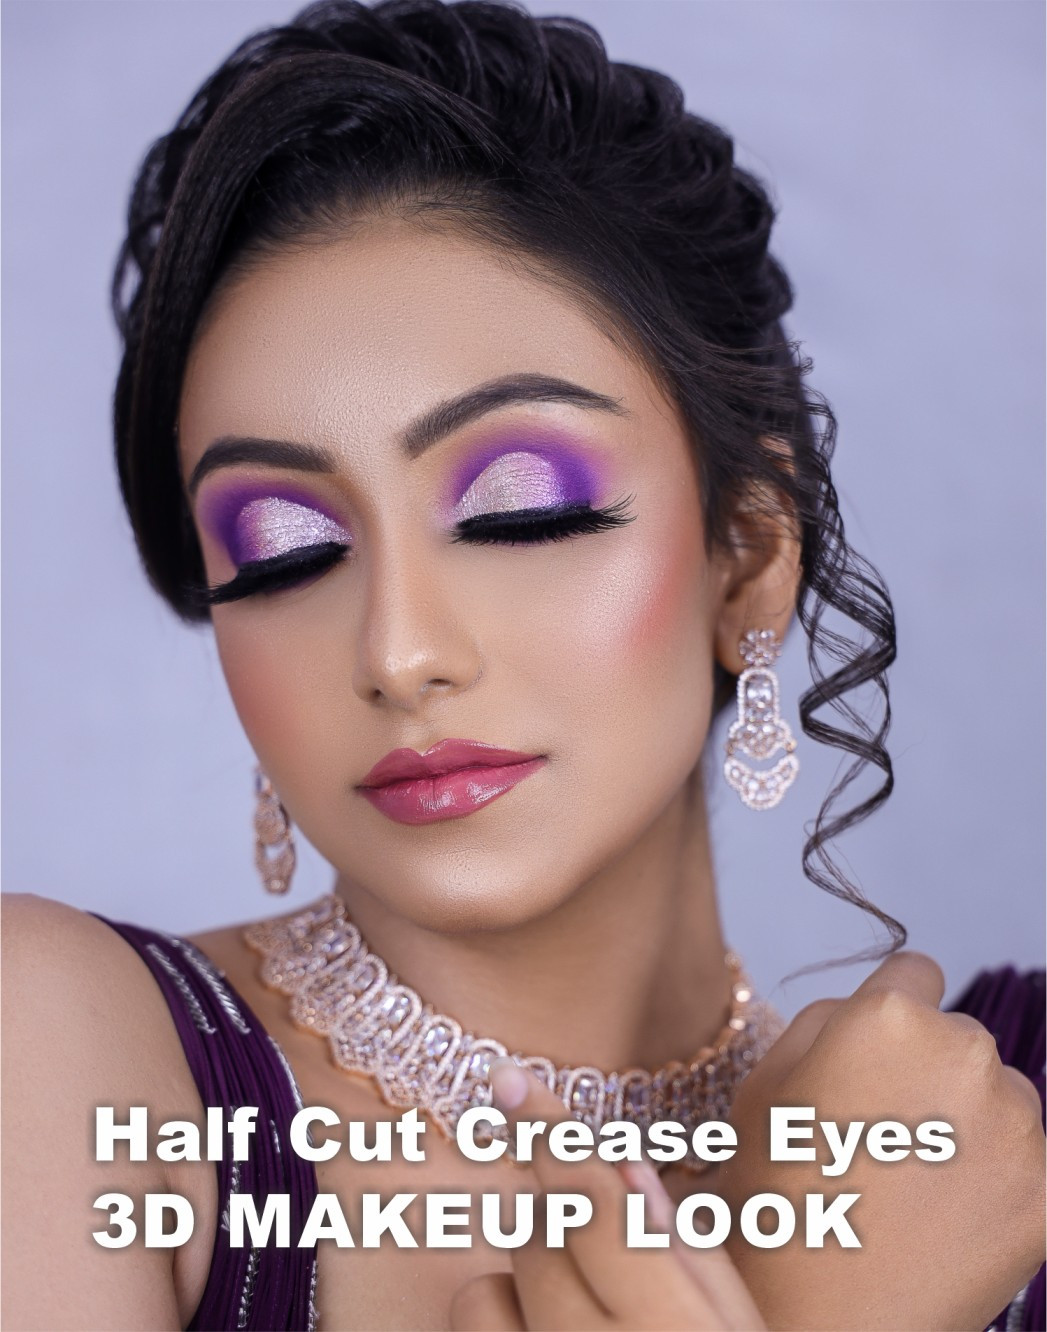 Half Cut Crease Eyes With 3D Makeup Look - Mkup002